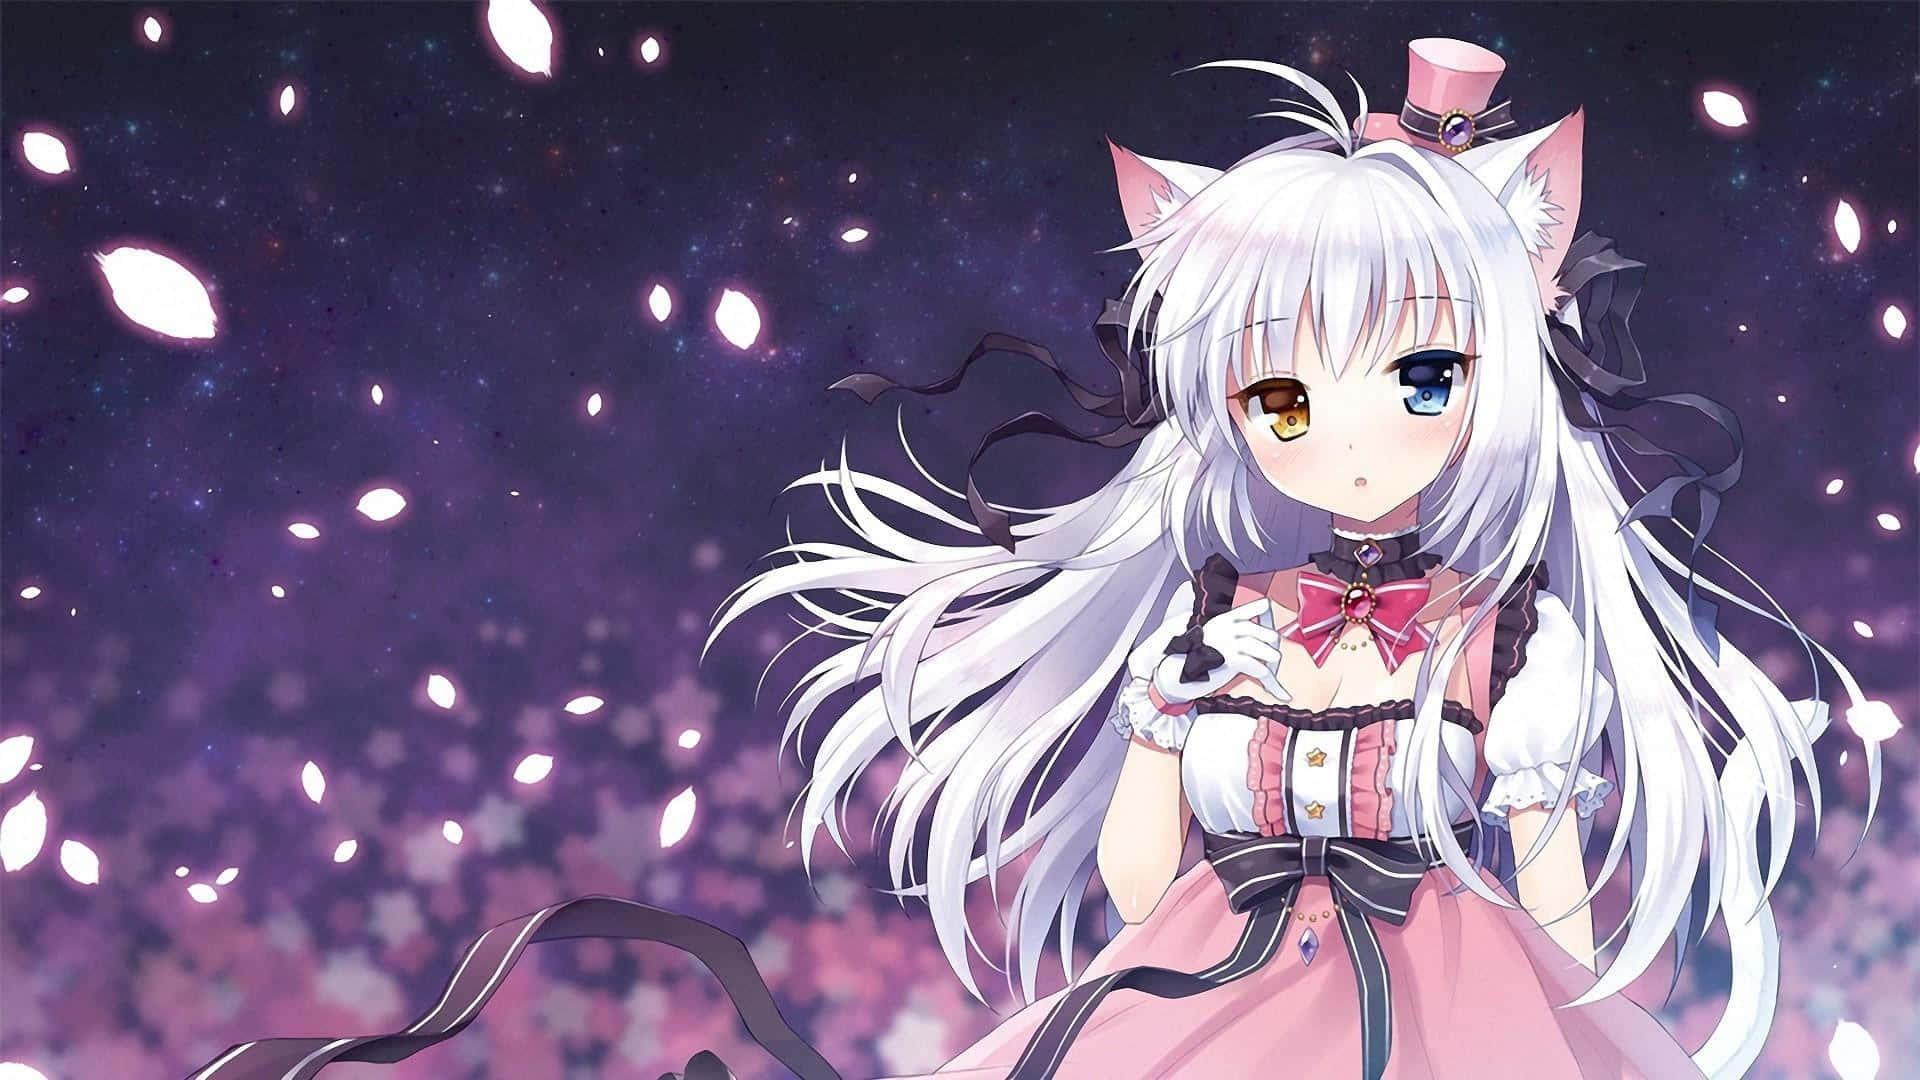 Anime Neko Girl Starry Background Background